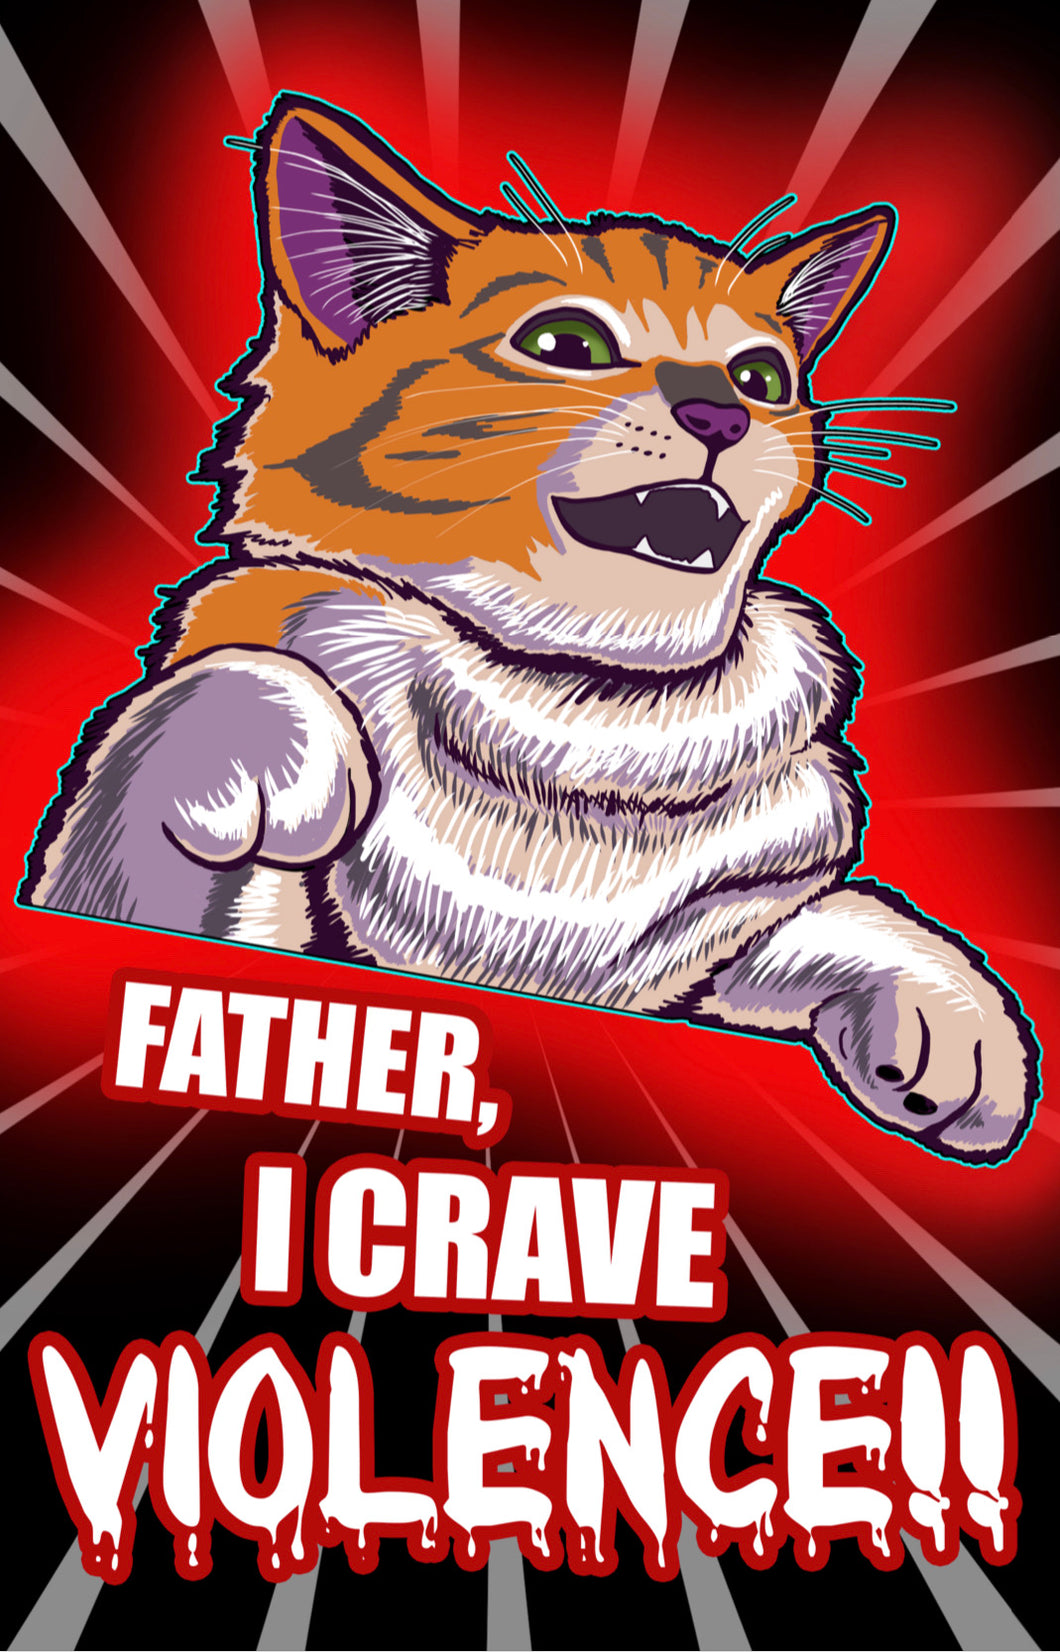 Father, I Crave VIOLENCE!! Orange Kitty Cat Meme Kitten - Art Print Poster